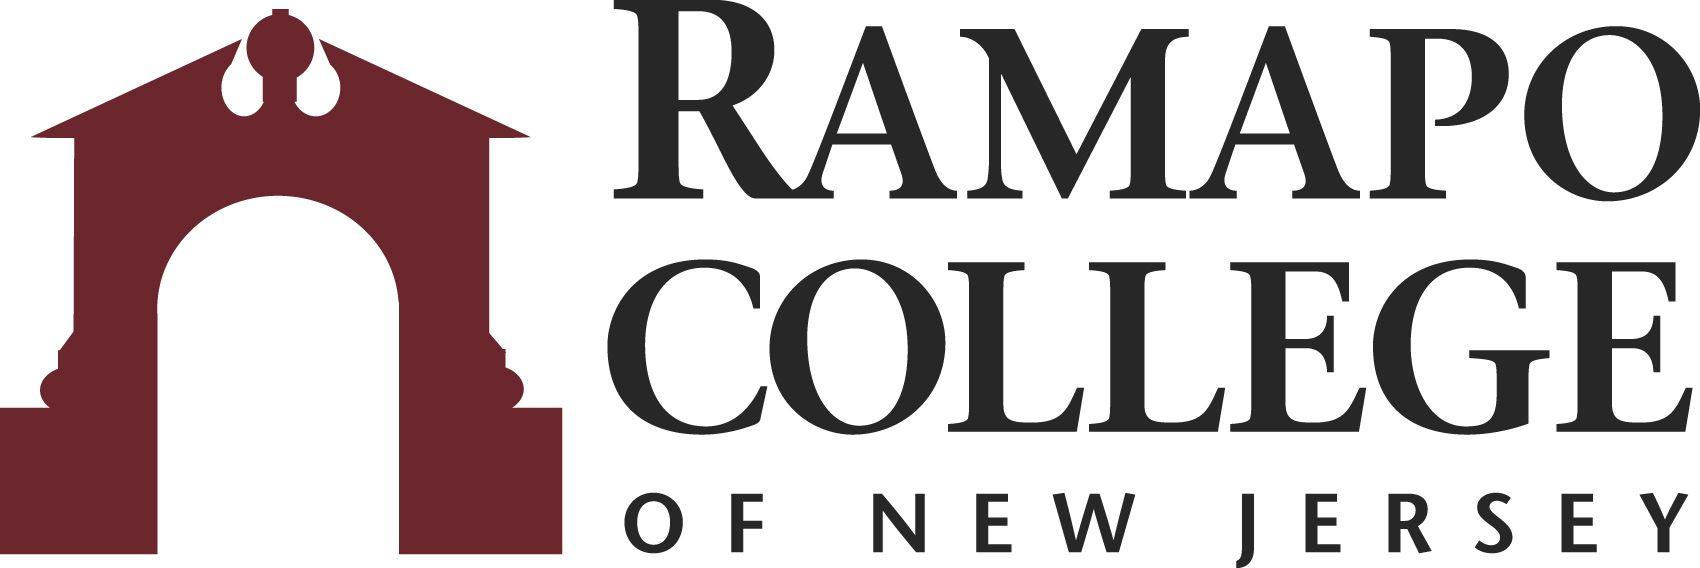 New Jersey Logo - Logo / Template Downloads - Design Standard || Ramapo College of New ...